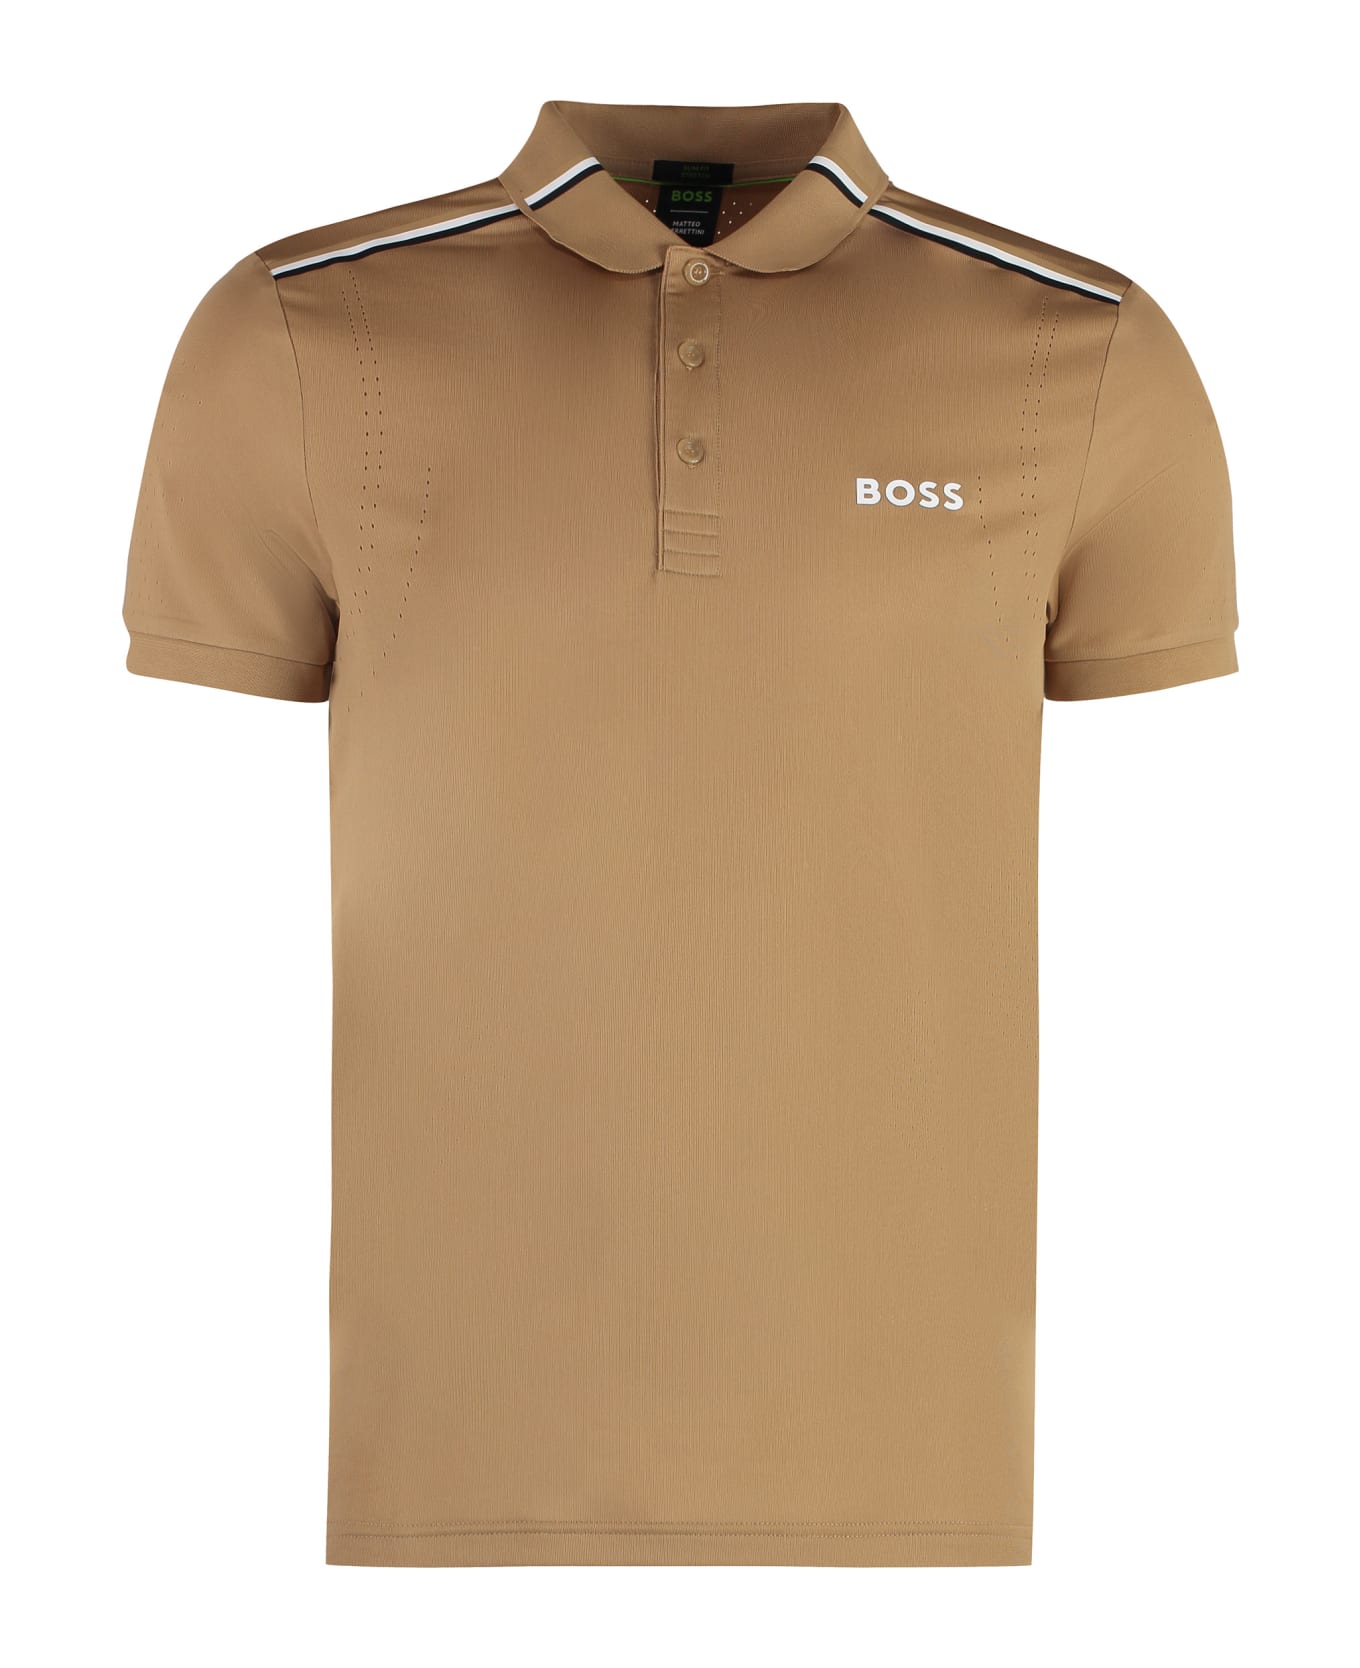 Hugo Boss Boss X Matteo Berrettini - Technical Fabric Polo Shirt - Beige